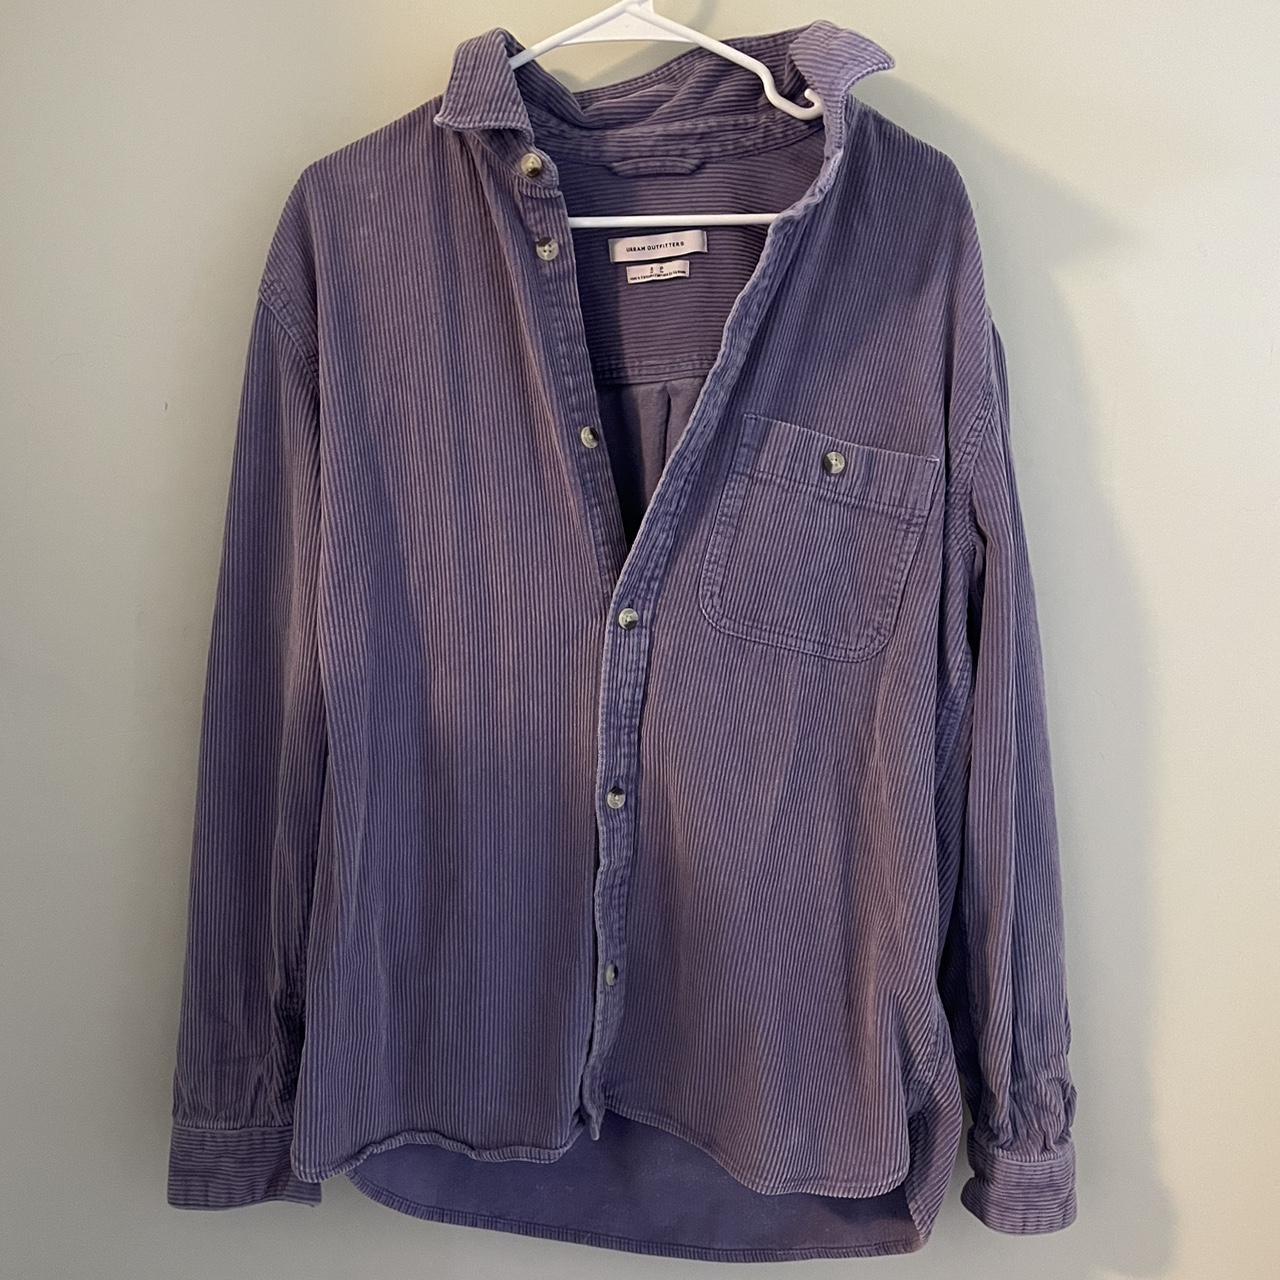 Urban Outfitters Men's Purple Shirt